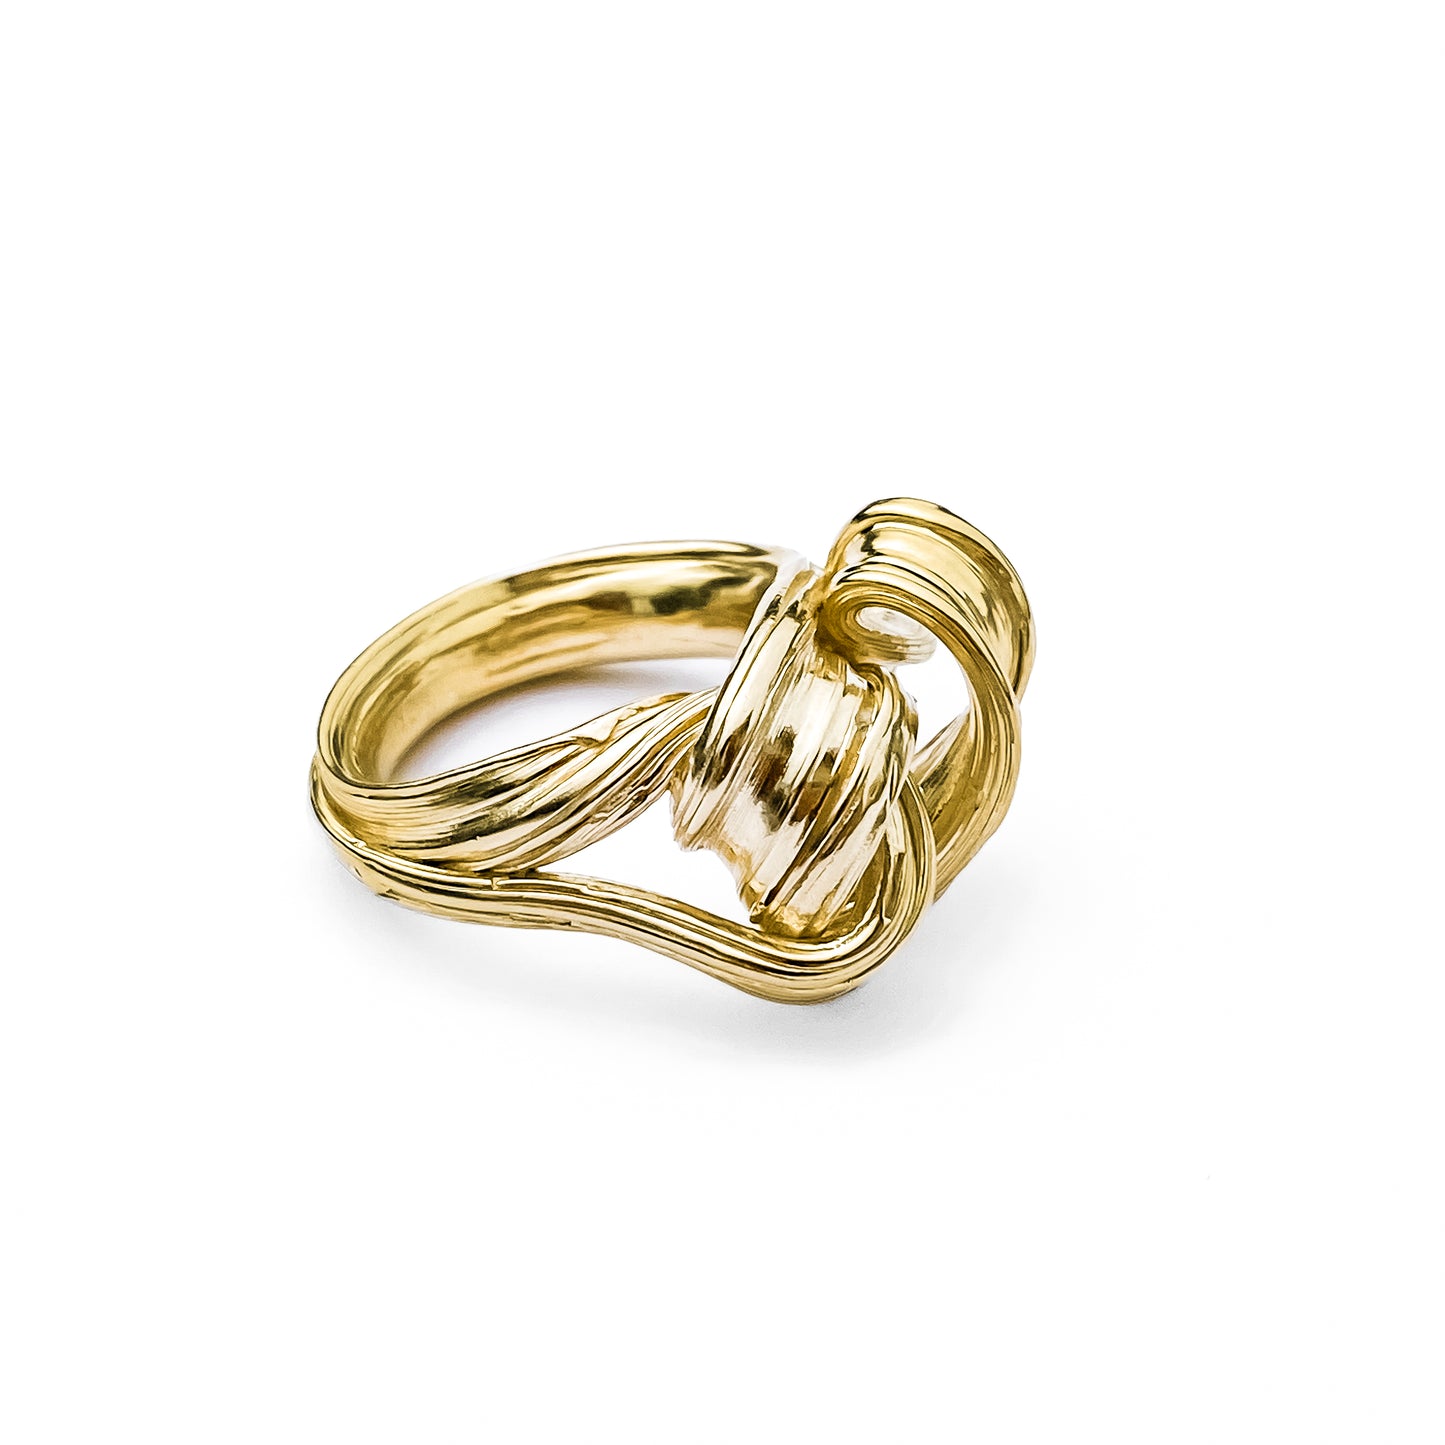 Gold Drift Ring - Size Q